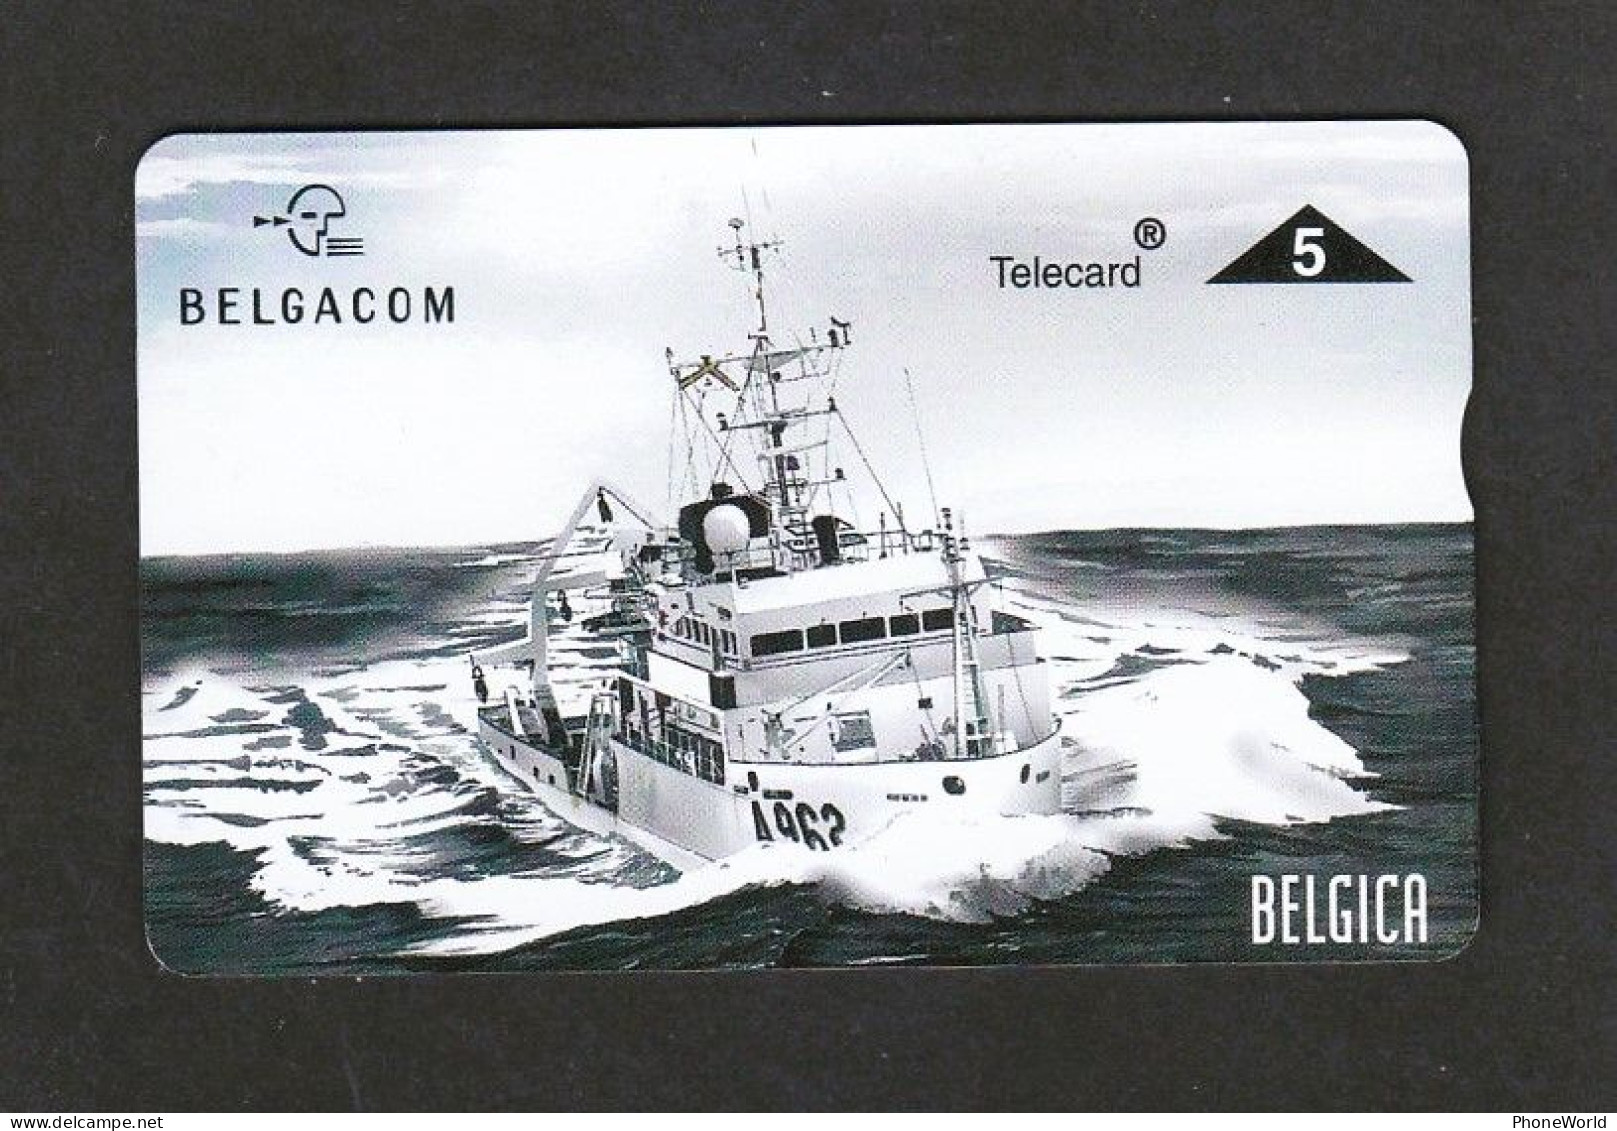 P551 - Belgica 2 - 706 L Mint - Ship - Army - Senza Chip